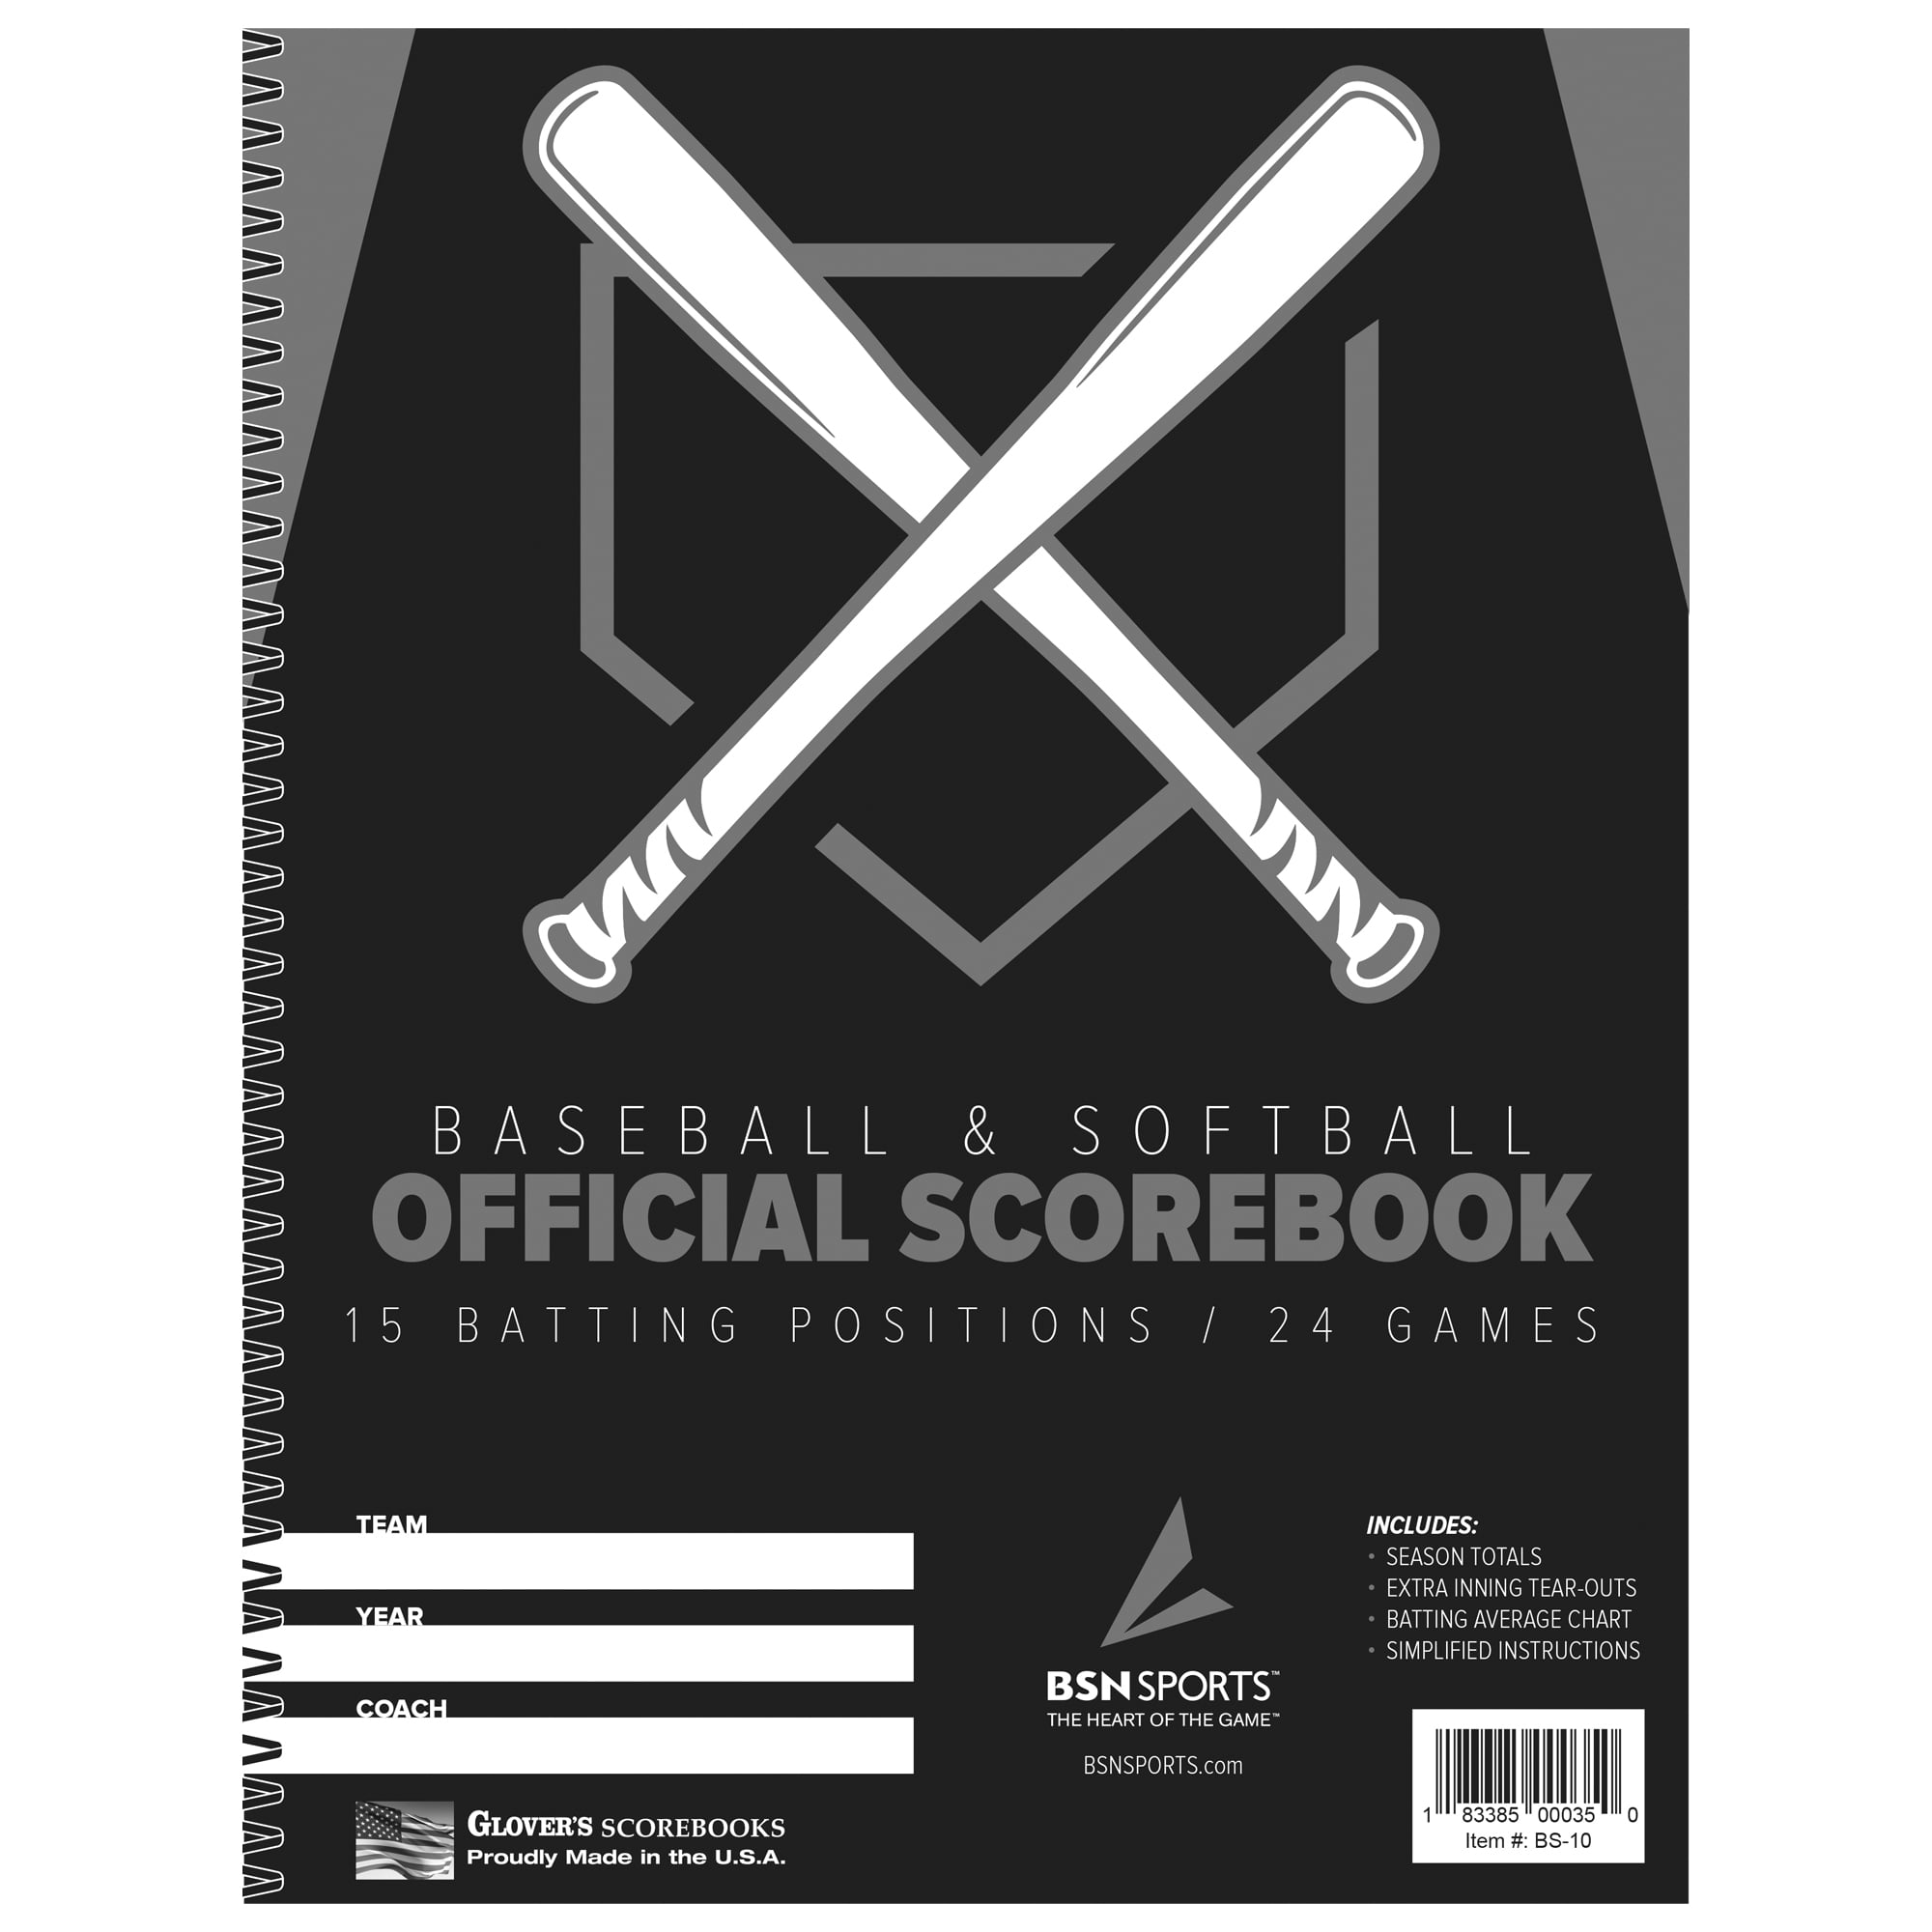 Franklin Sports Baseball and Softball Scorebook 19187 for sale online 